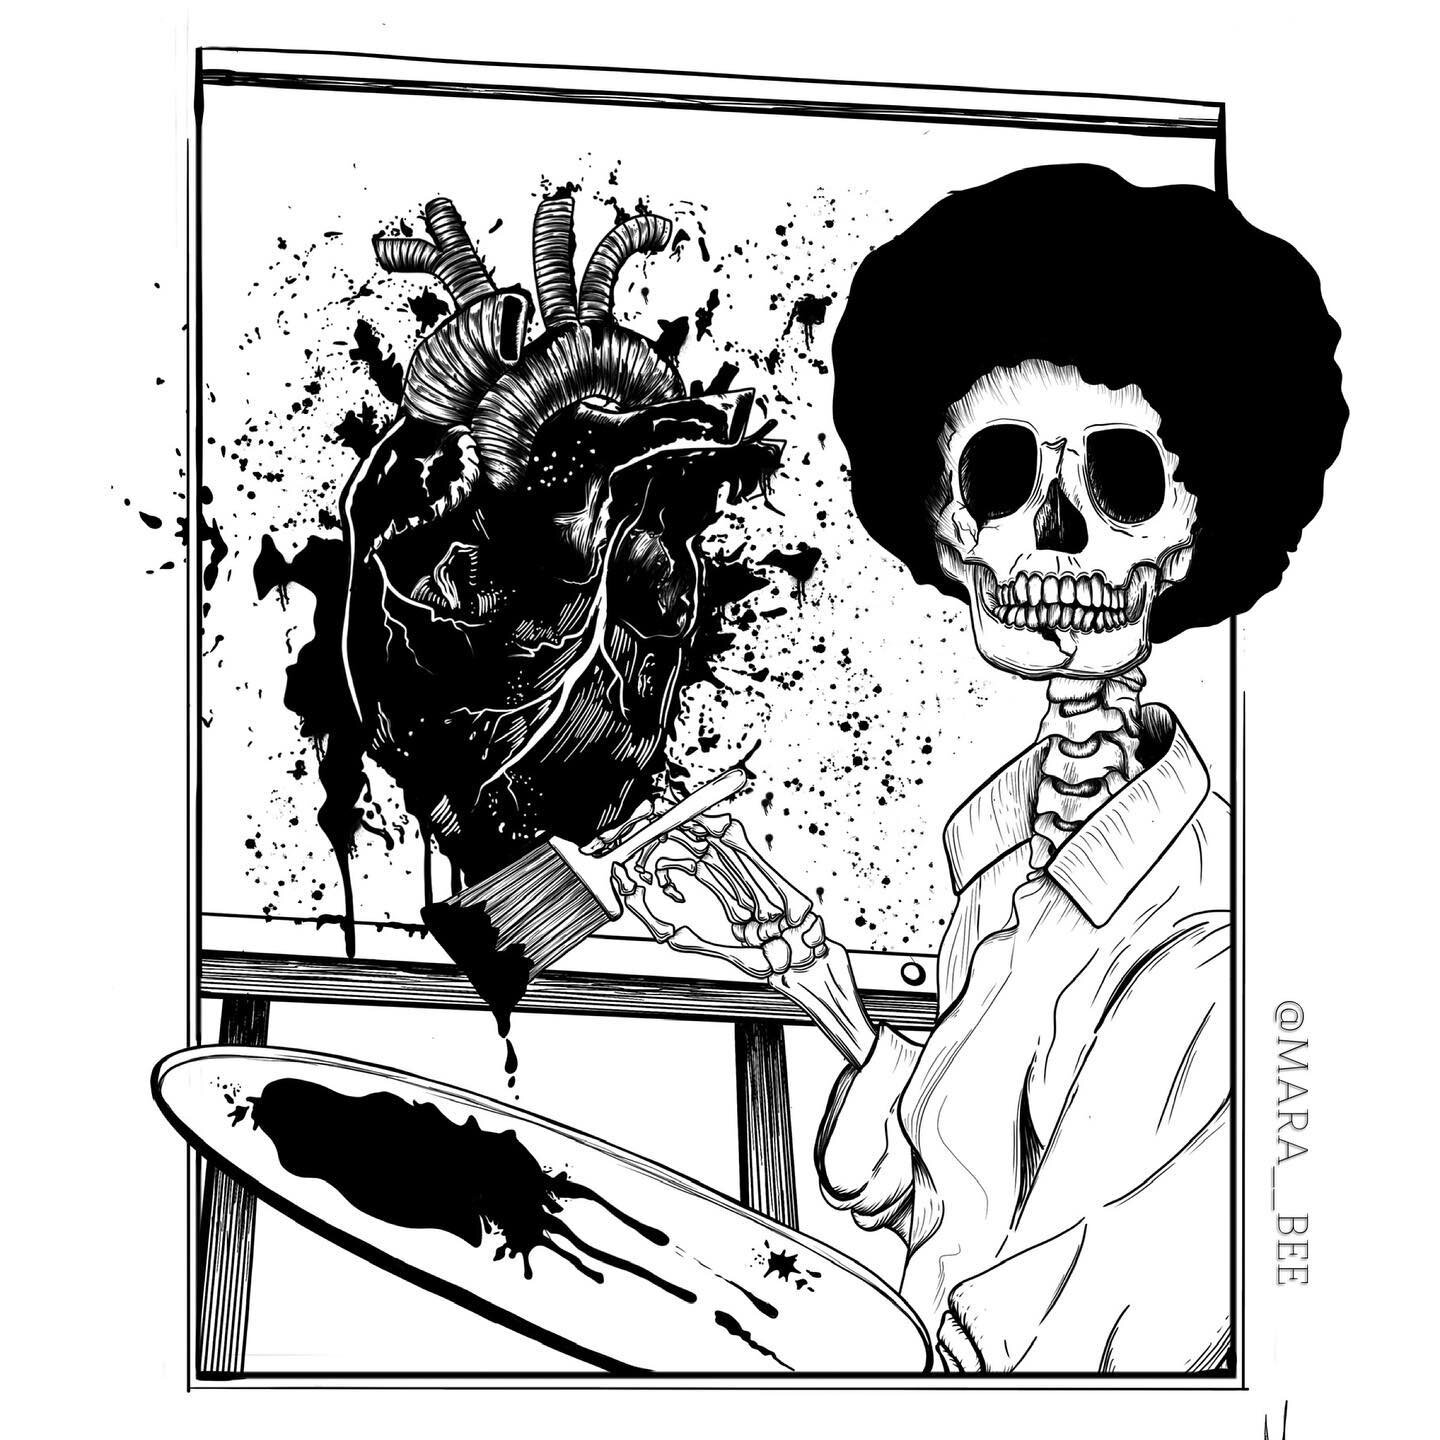 &ldquo;Paint With Your Heart&rdquo; - #BobRoss 
&bull;
New print up in the shop :) 
&bull;
&bull;
&bull;
&bull;
&bull;
#bobross #bobrosspainting #bobrossmemes #surrealism #surrealist #skeleton #tattooprint #heart #anatomicalheart #painting #procreate